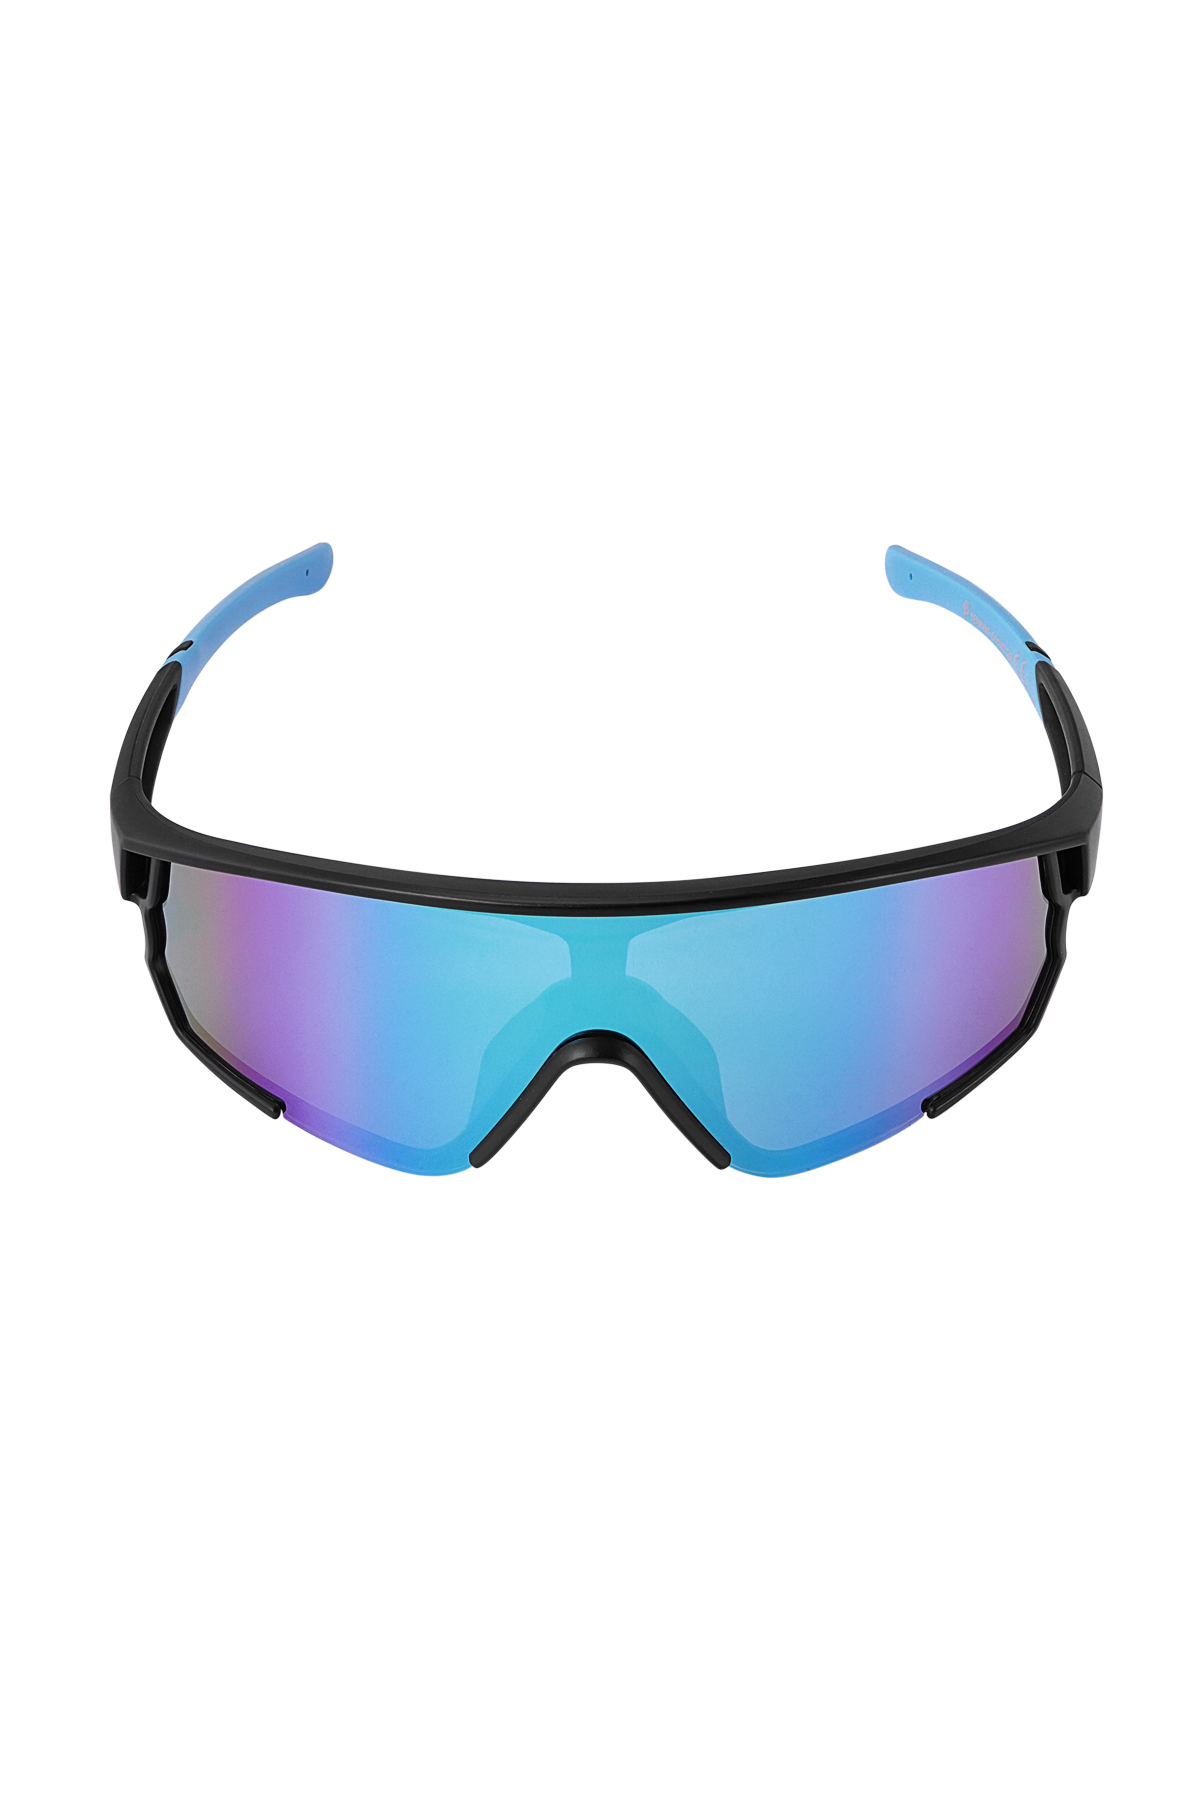 Sunglasses colored lenses - black/blue h5 Picture6